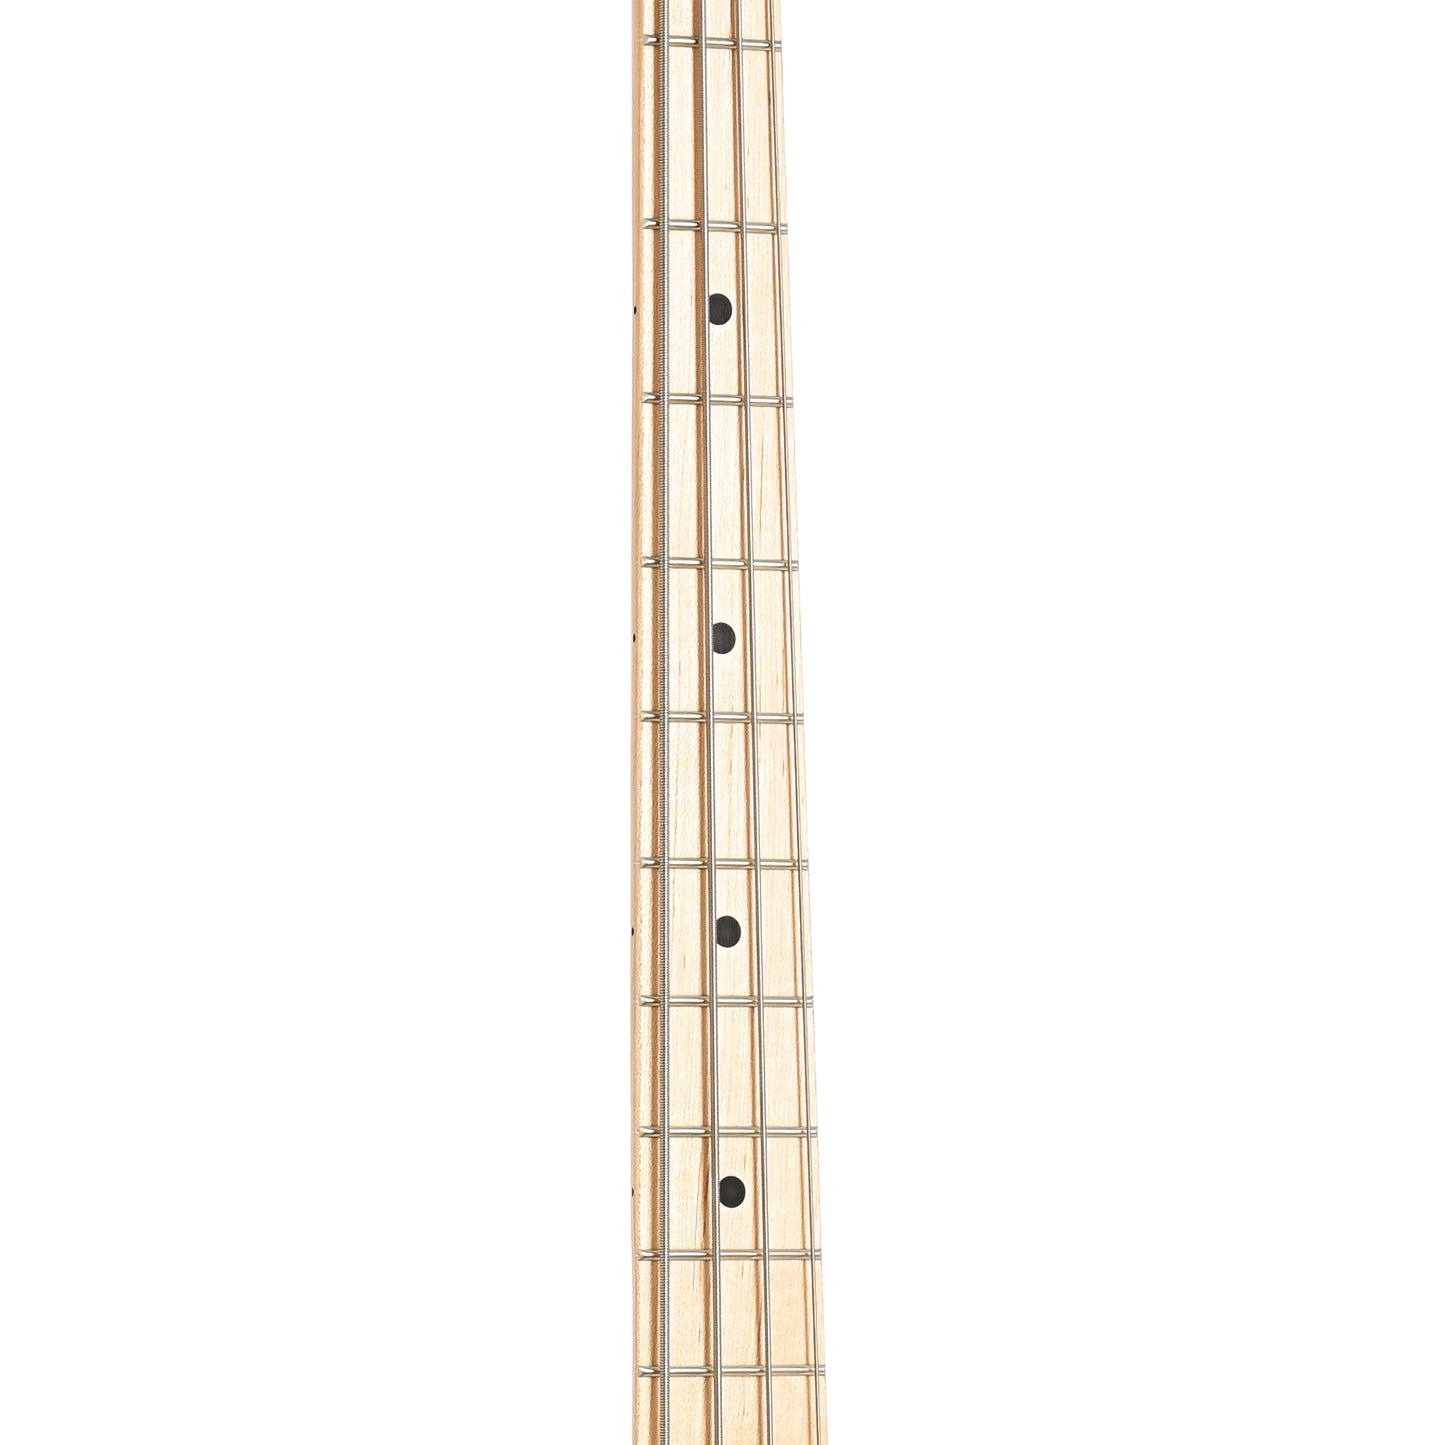 Image 6 of Sterling by Music Man StingRay 4 Bass, Vintage Sunburst Satin Finish - SKU# RAY4-VSBS : Product Type Solid Body Bass Guitars : Elderly Instruments